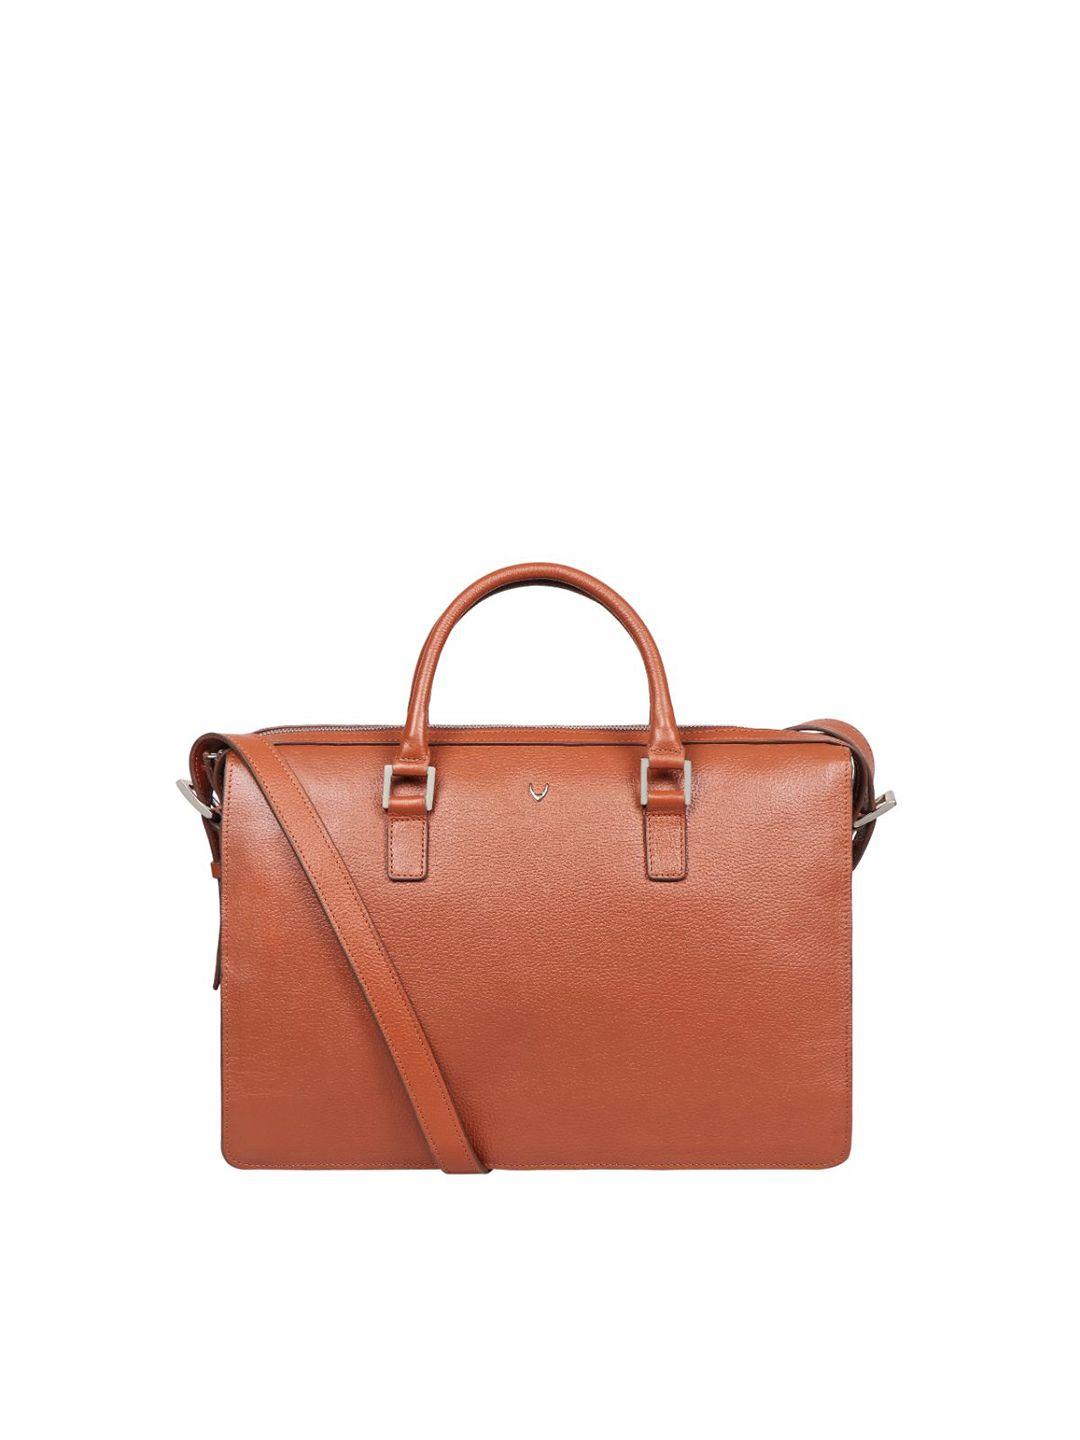 hidesign women detachable sling strap leather messenger bag